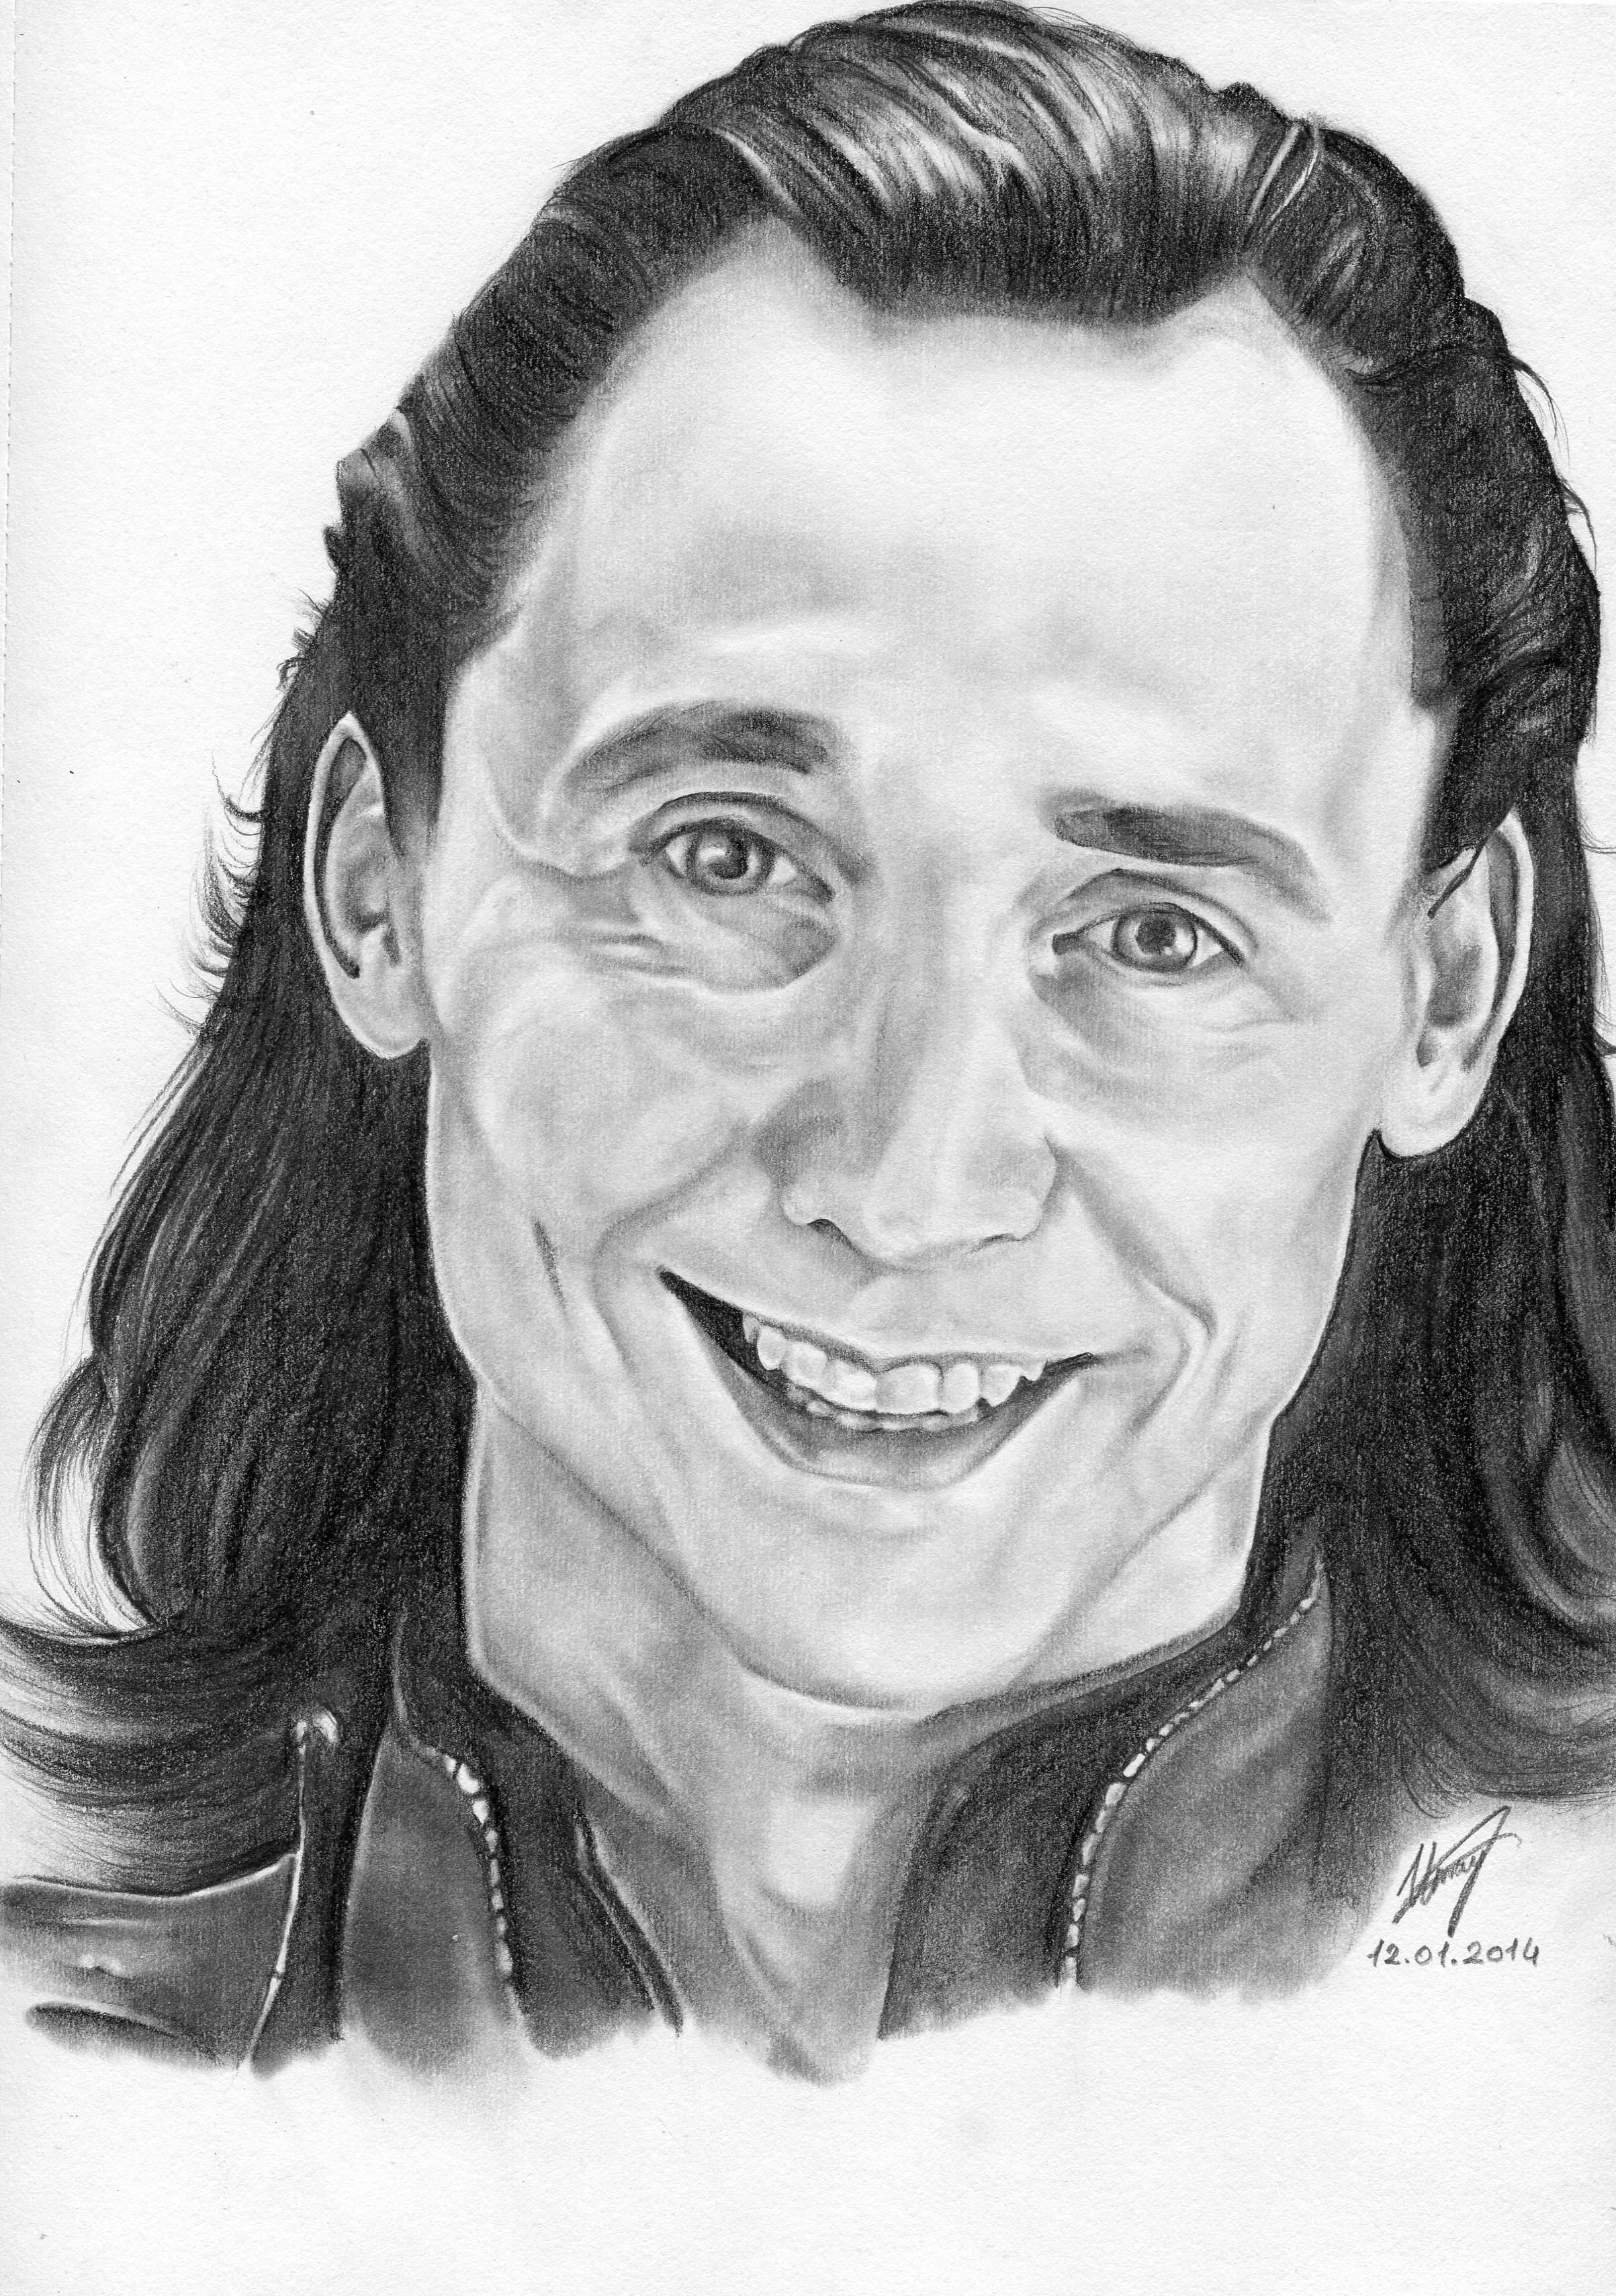 Loki/Tom Hiddleston